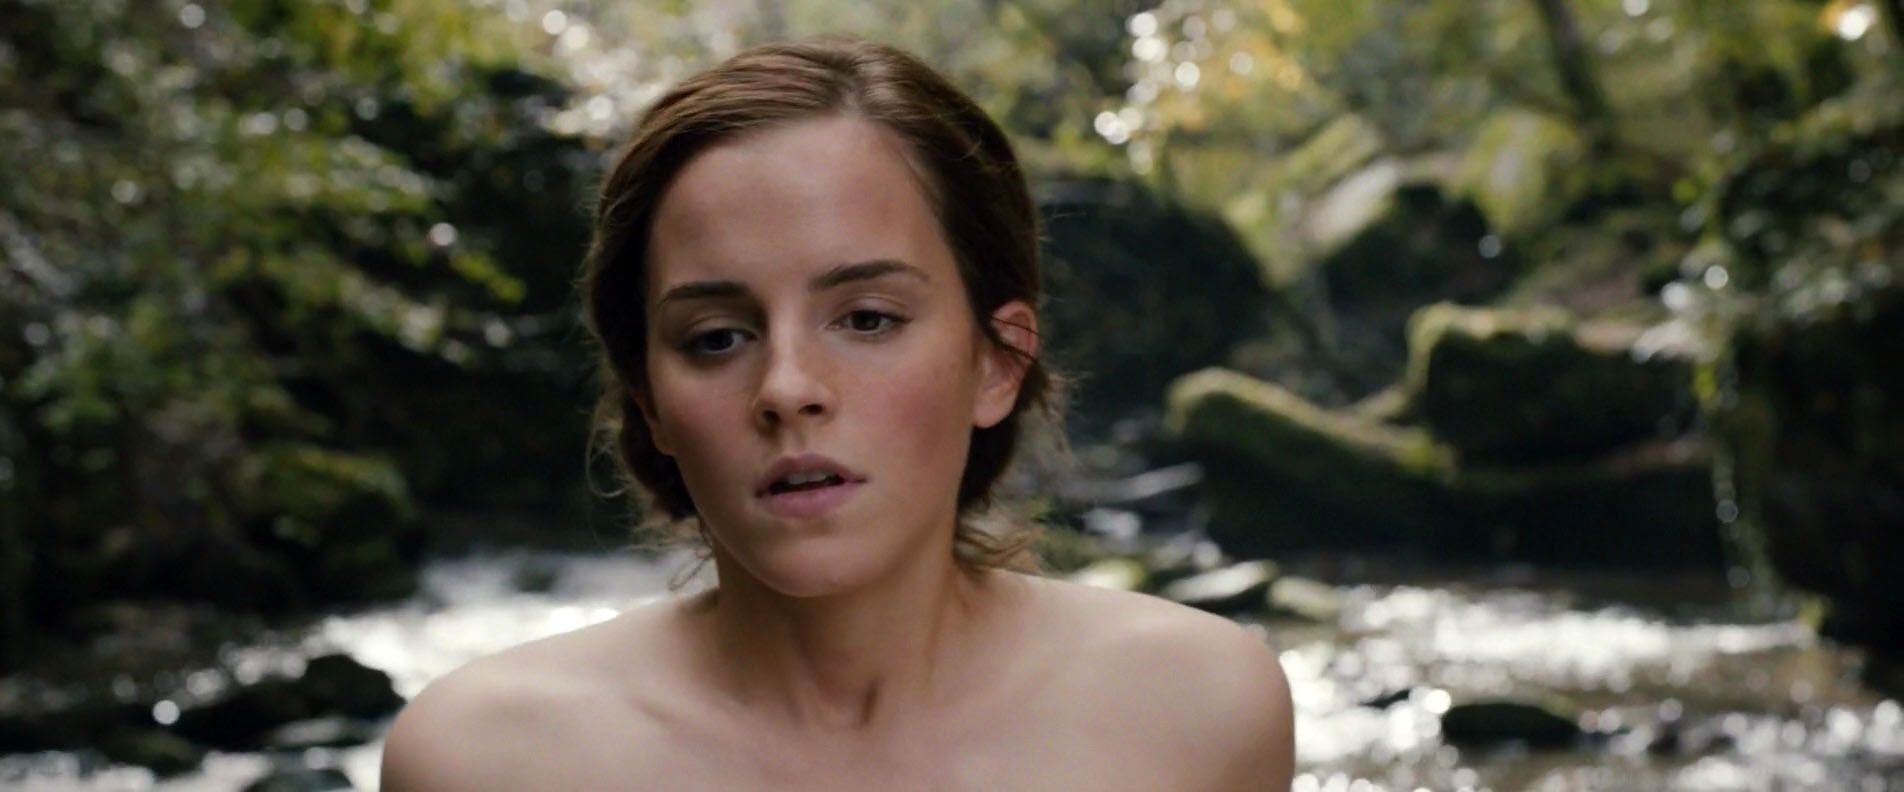 Emma Watson Sexy Colonia 2015 Hd 1080p Thefappening